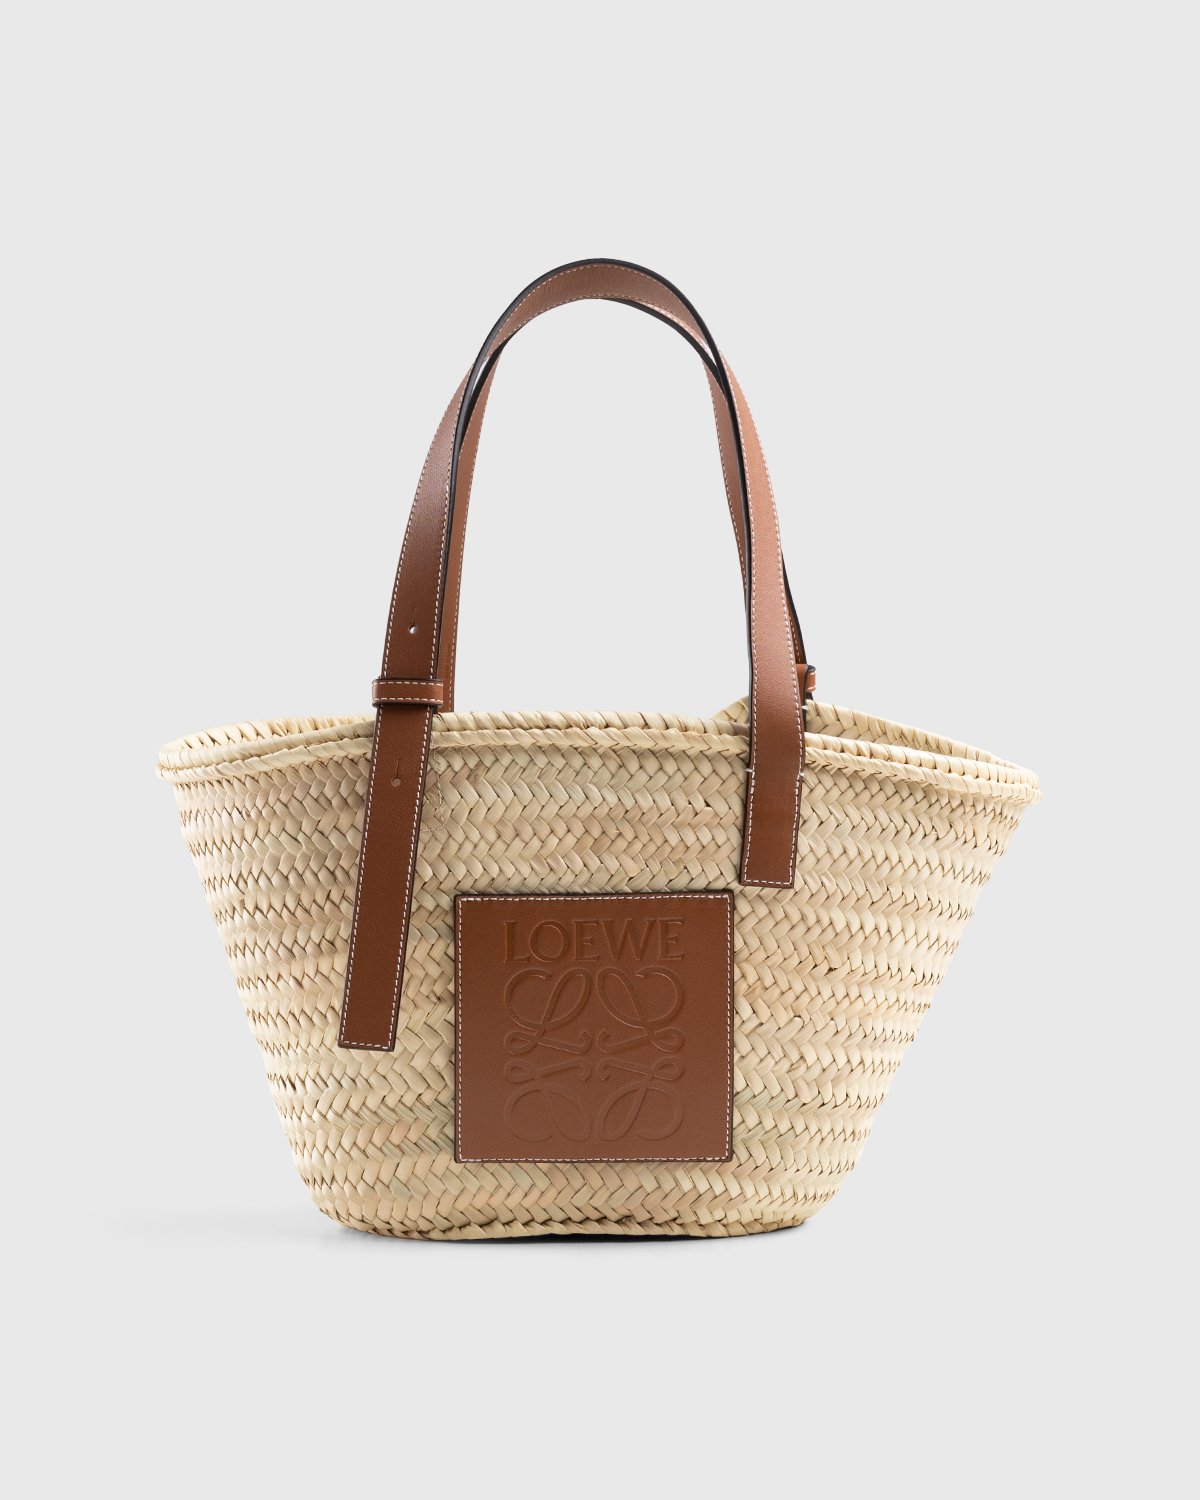 Loewe - Paula's Ibiza Basket Bag Natural/Tan - Accessories - Beige - Image 1